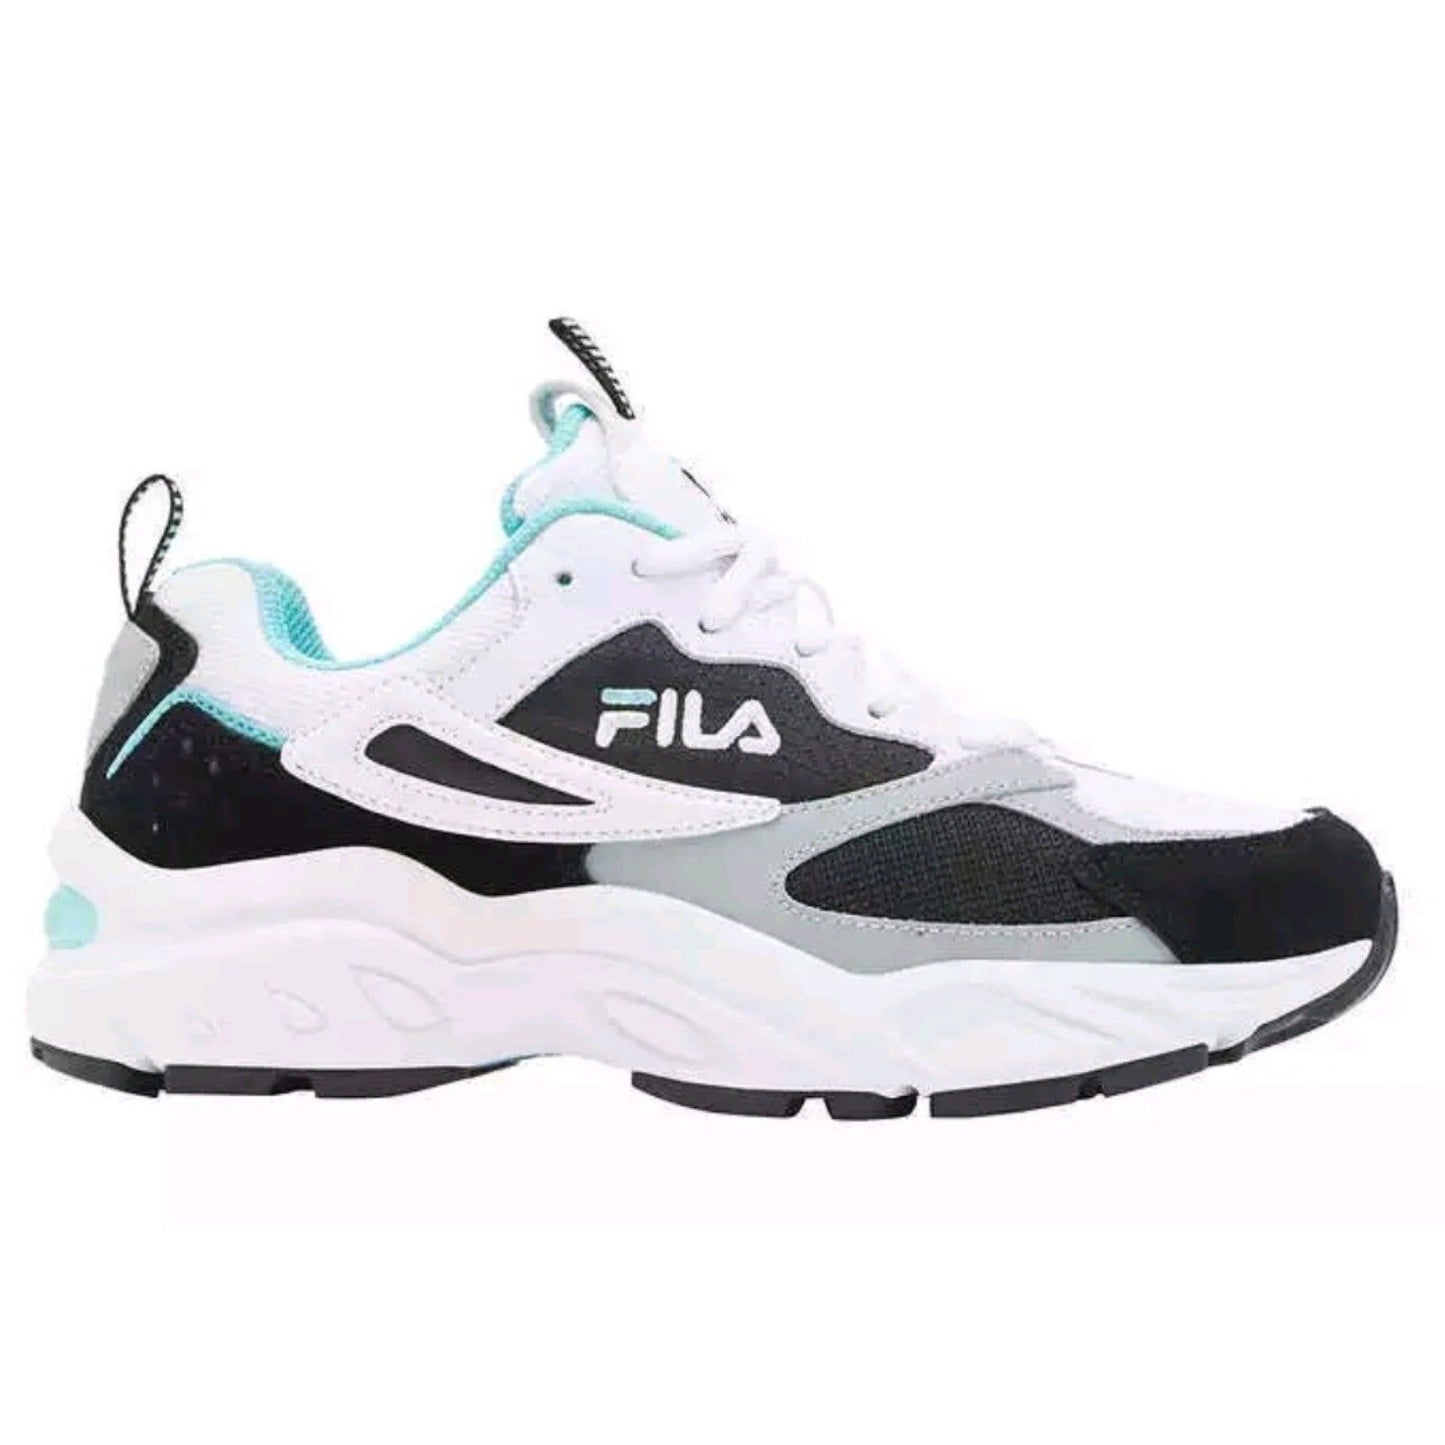 FILA Sneakers Women's Activewear Envizion Athletic Shoes